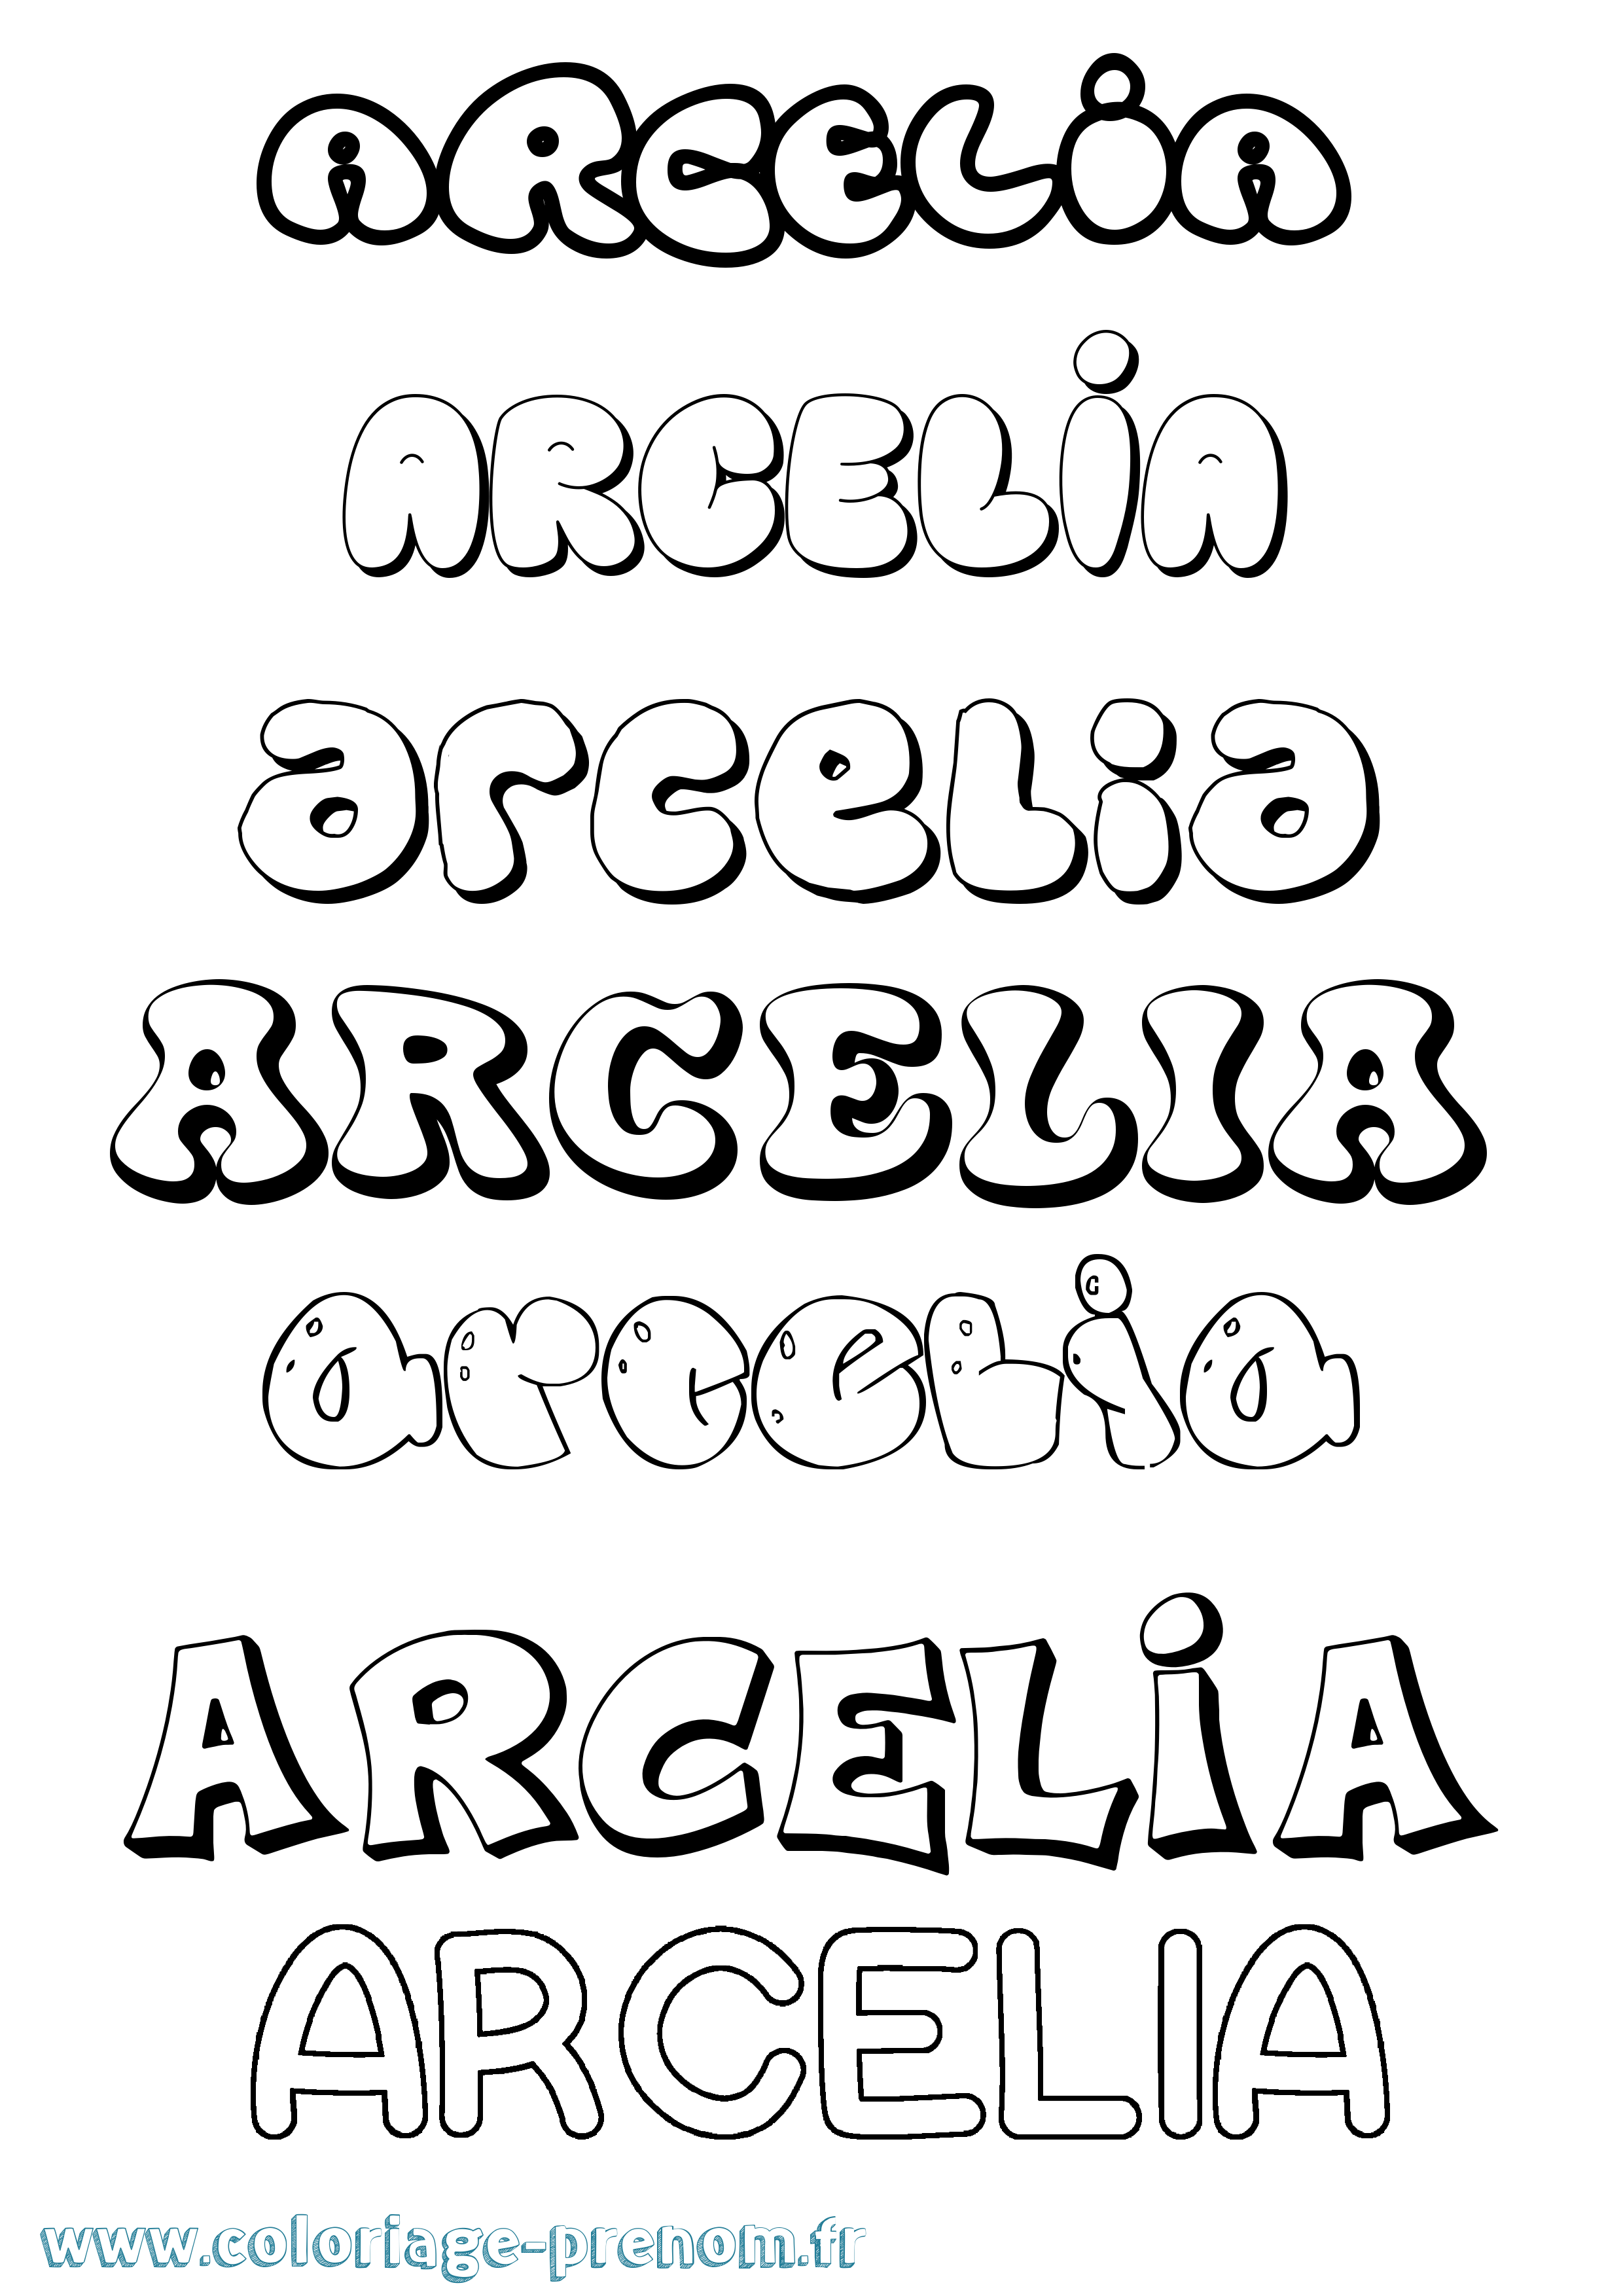 Coloriage prénom Arcelia Bubble